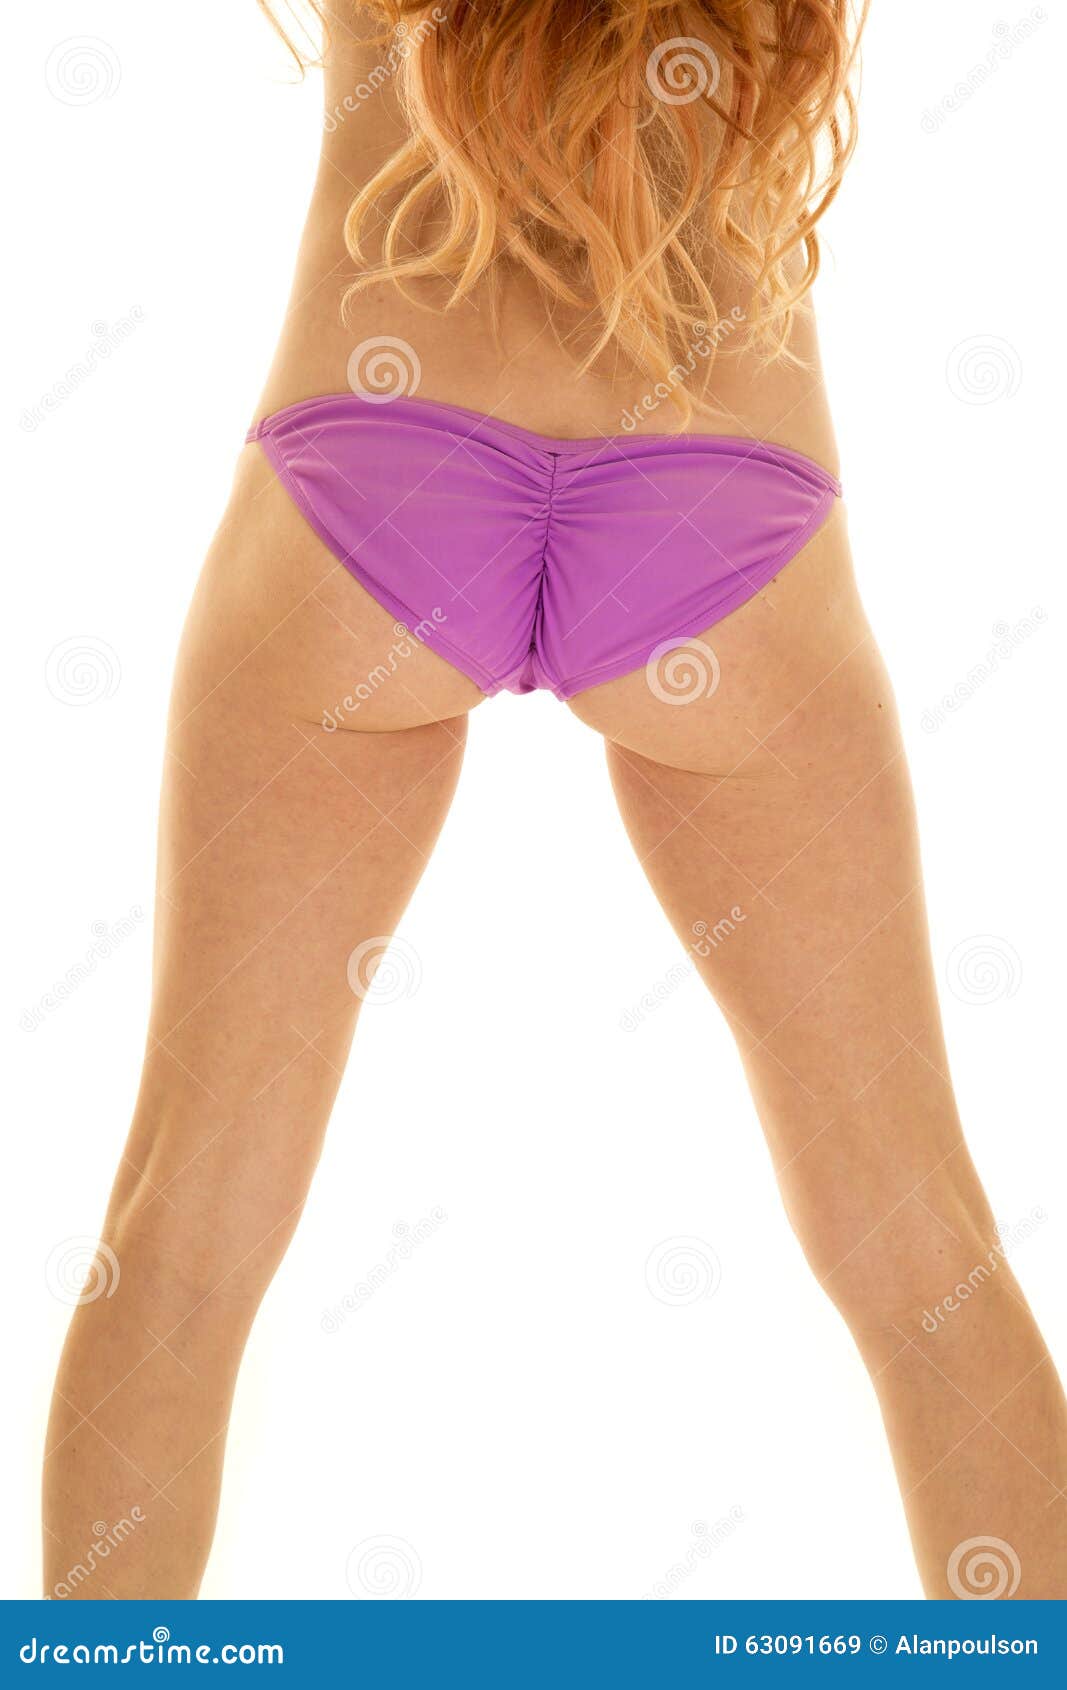 Red Head Woman Purple Bikini Stand Stock Image